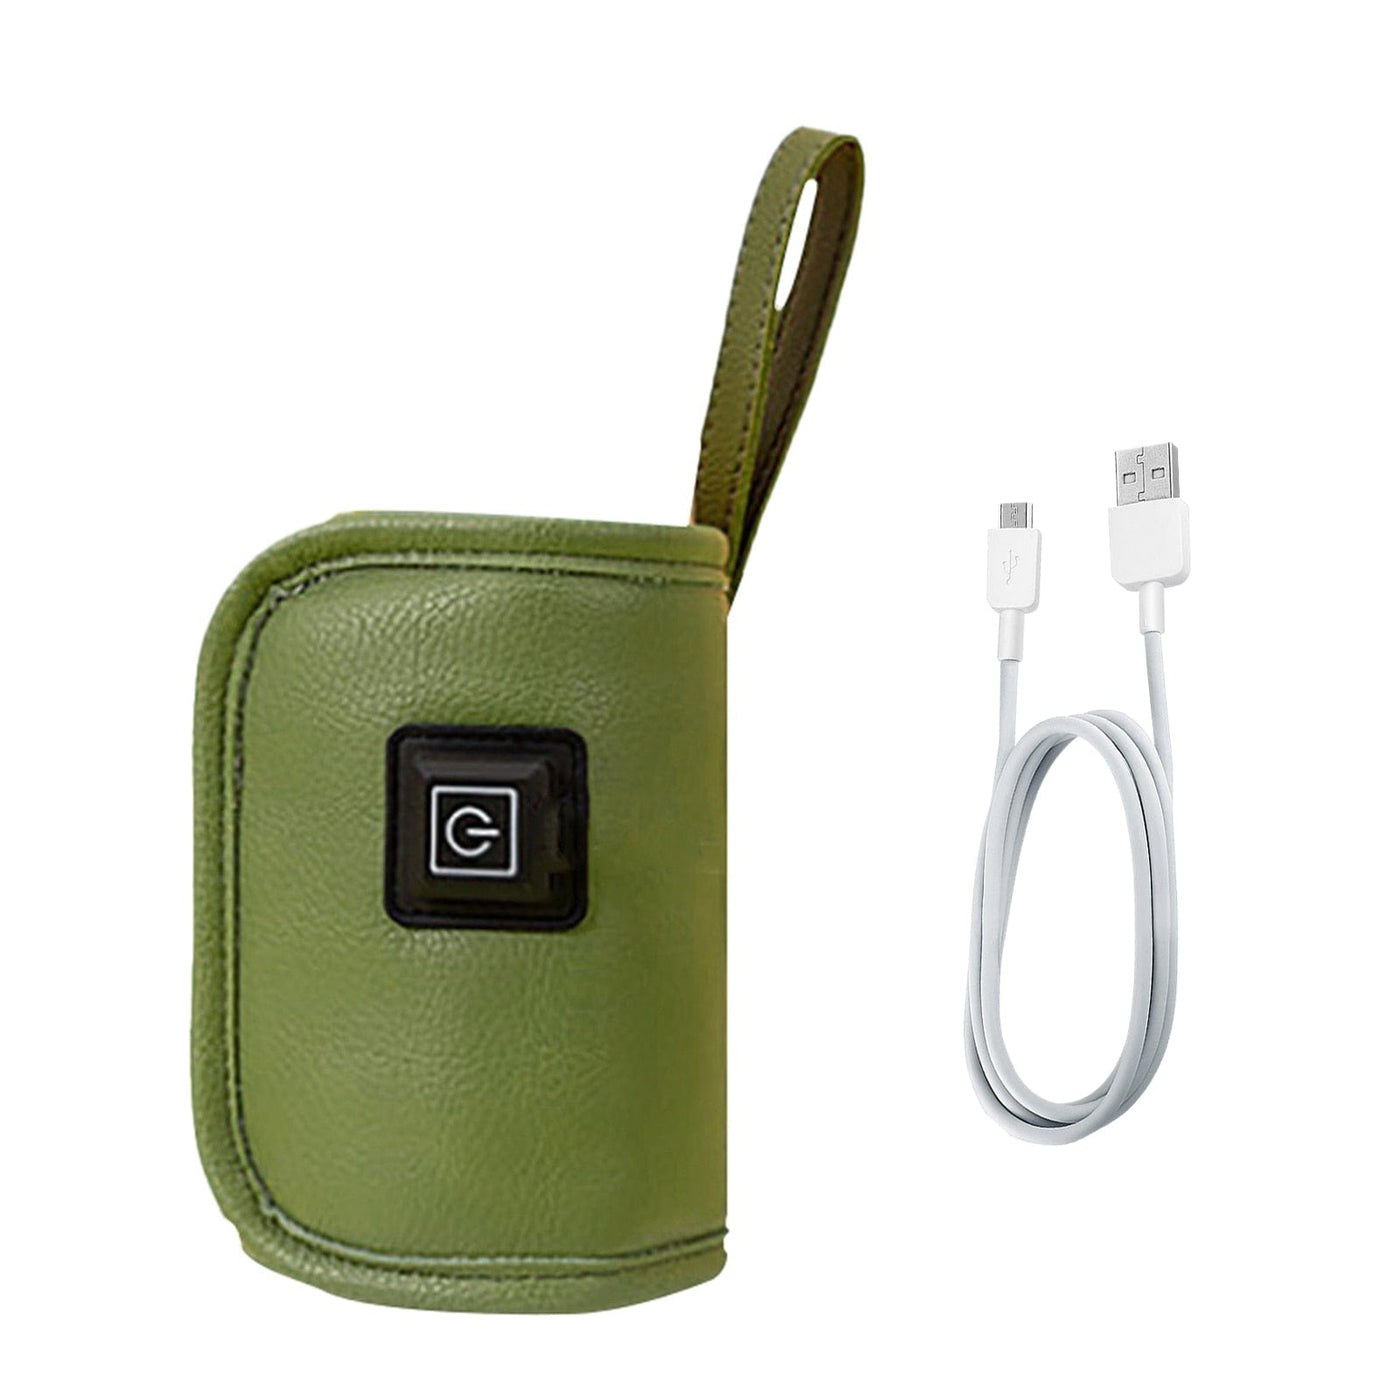 USB Travel Stroller Insulated Bag, Baby Nursing Bottle Heater for Outdoor Winter - Smart Tech Shopping